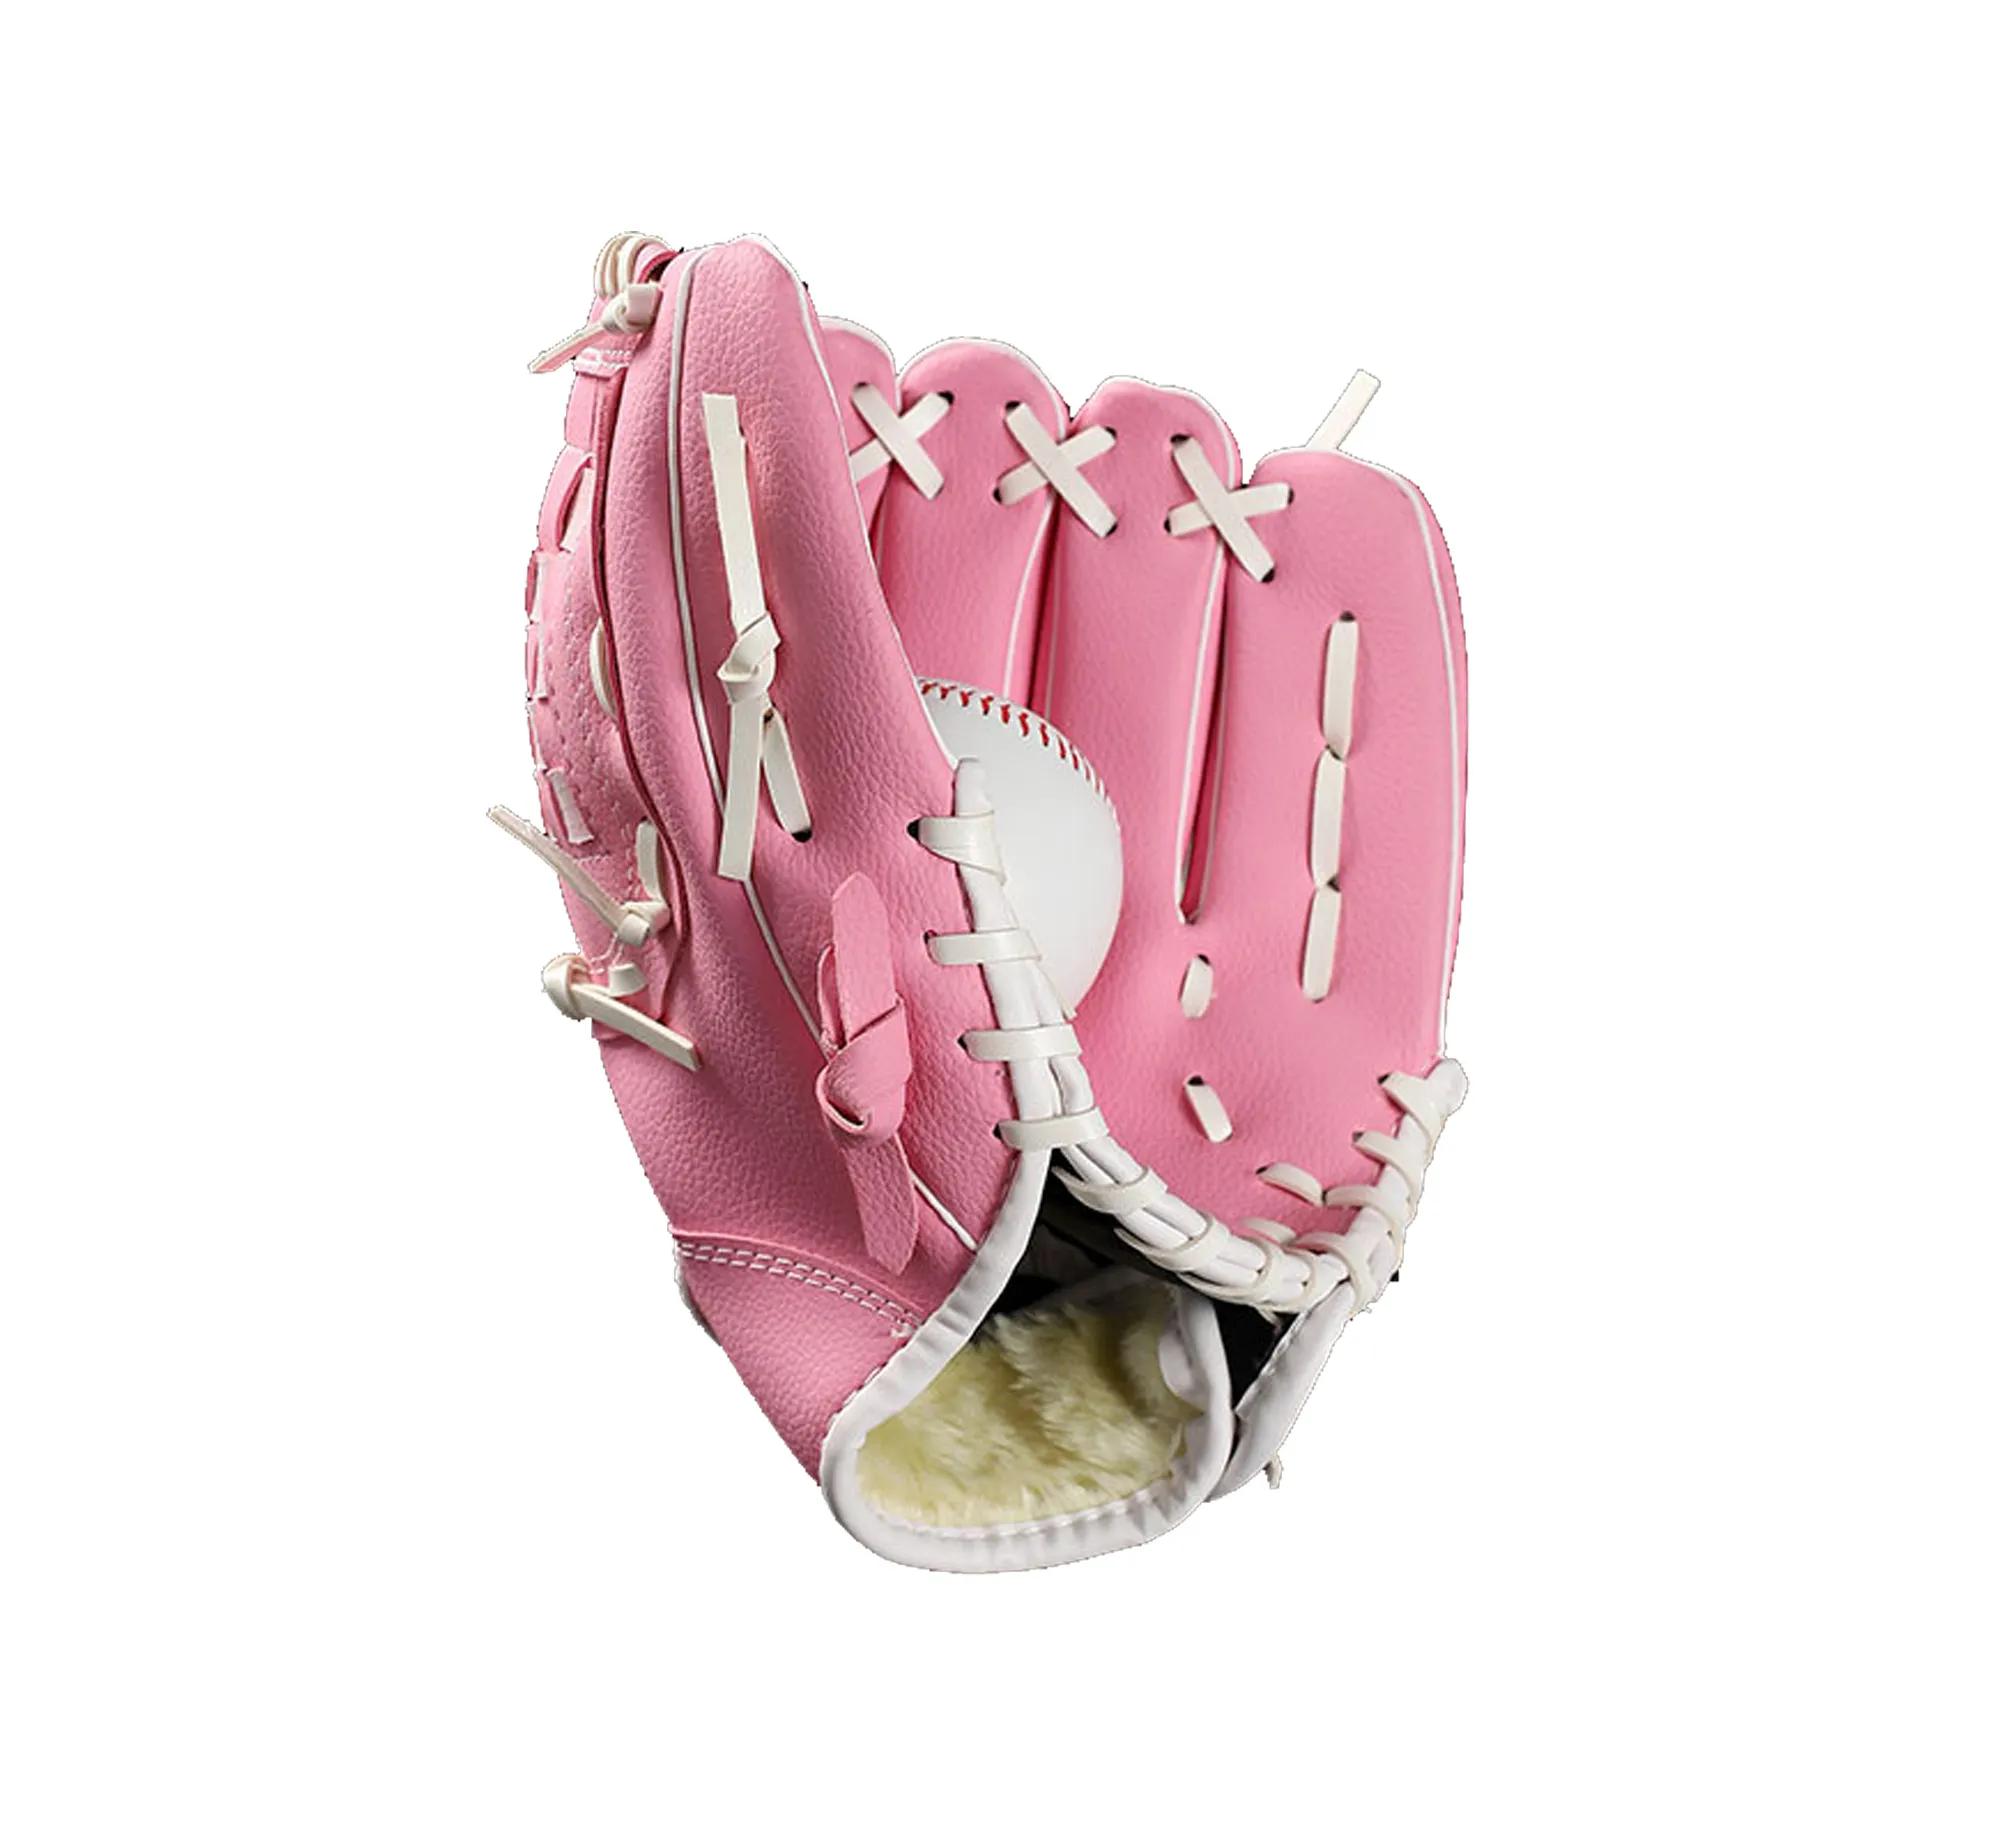 inventory leather baseball youth sporting glove manufacturer custom batting Glove Baseball